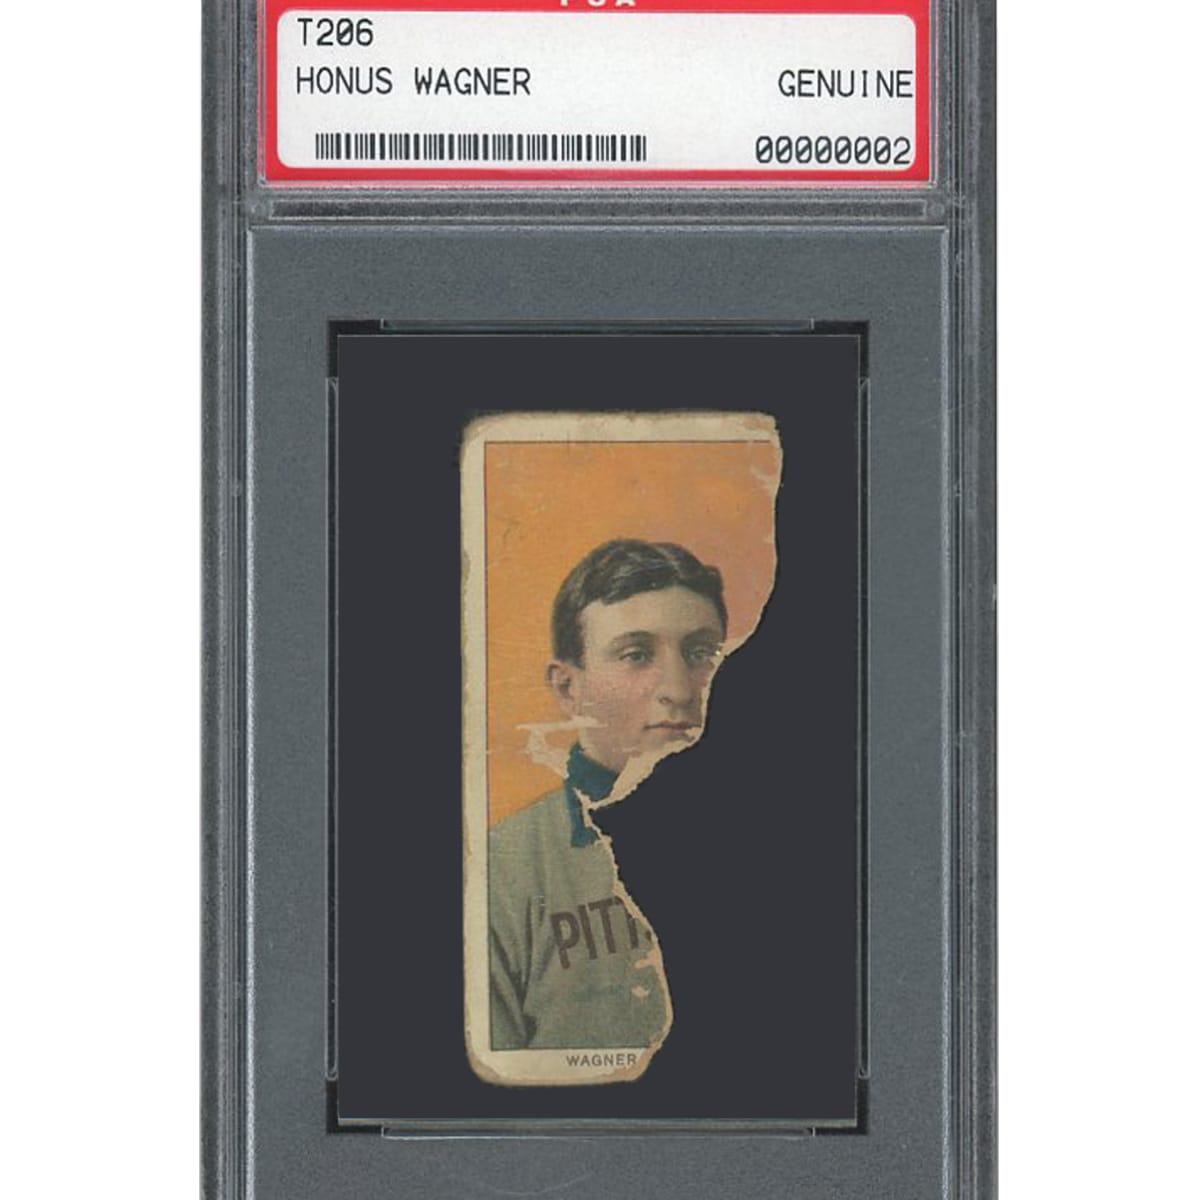 Rare Honus Wagner baseball card sells for record $6.6 million at